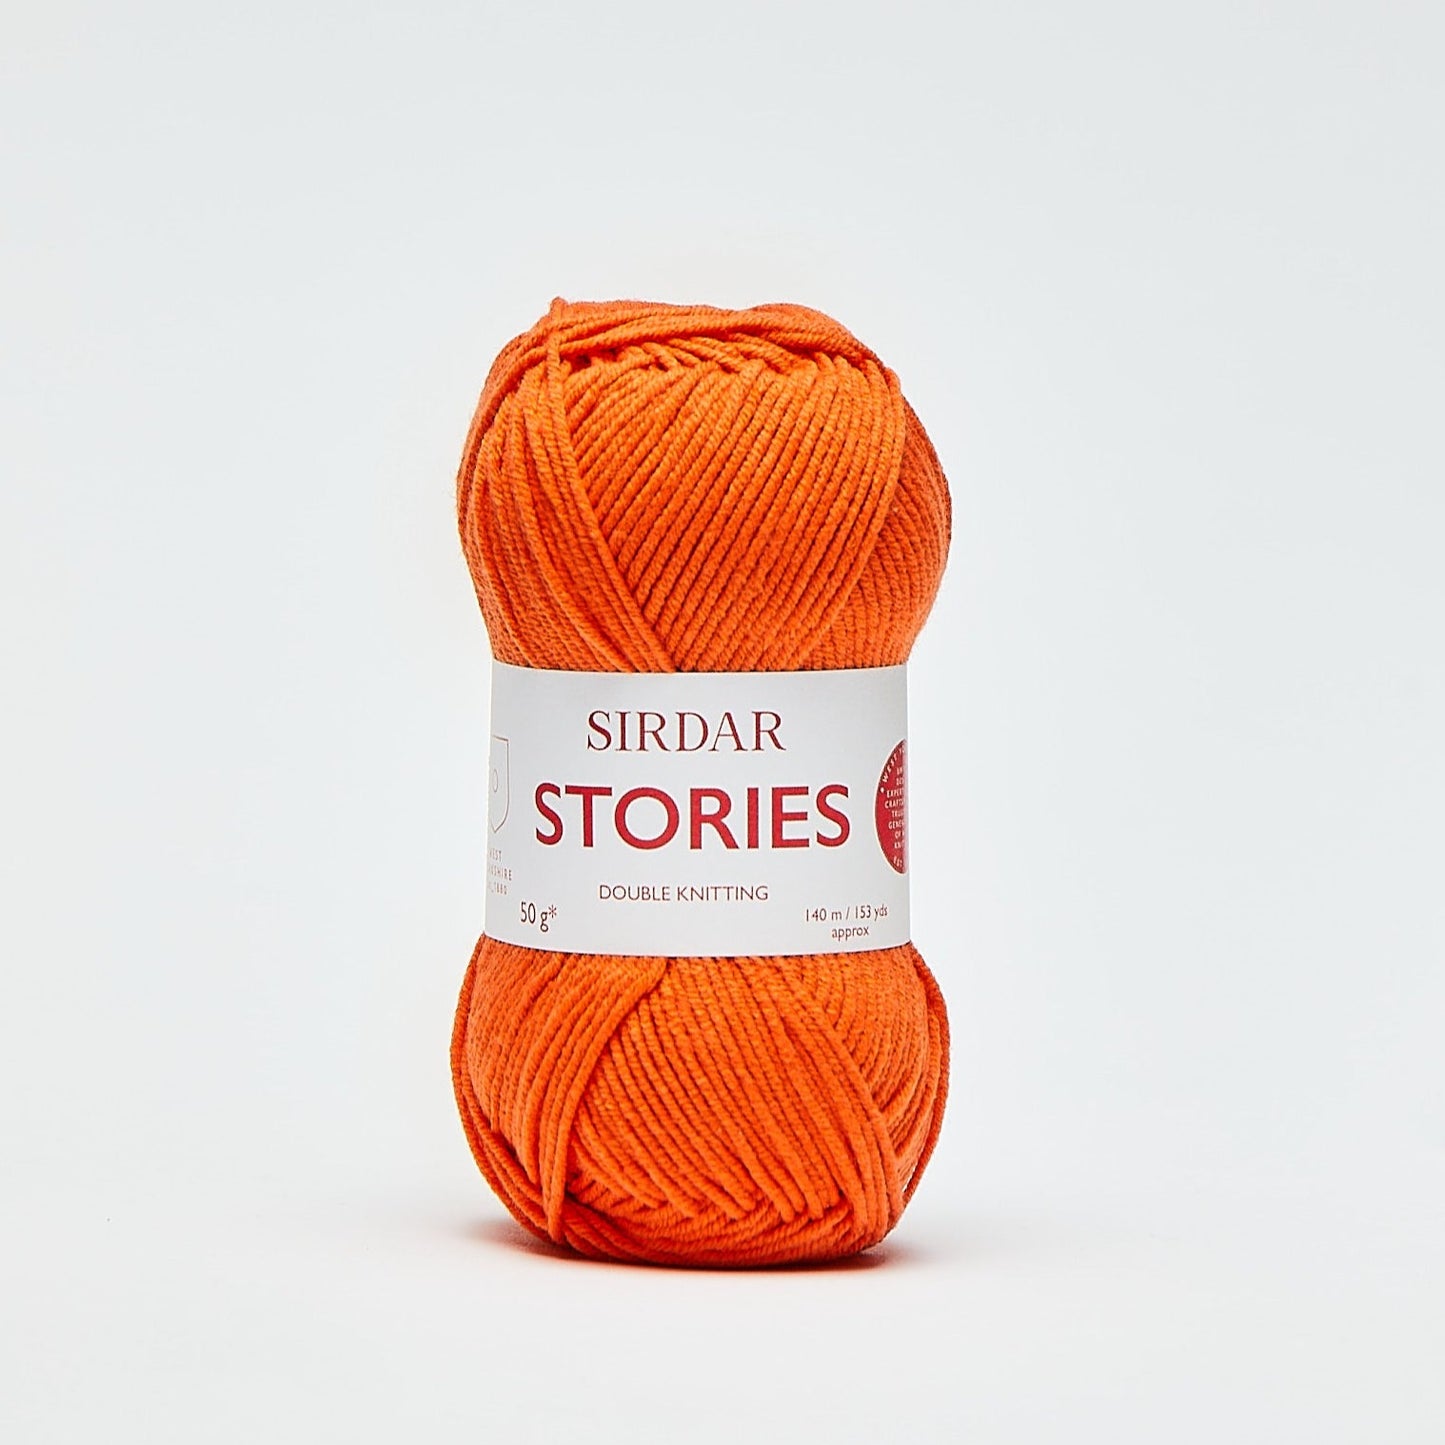 Sirdar Stories DK